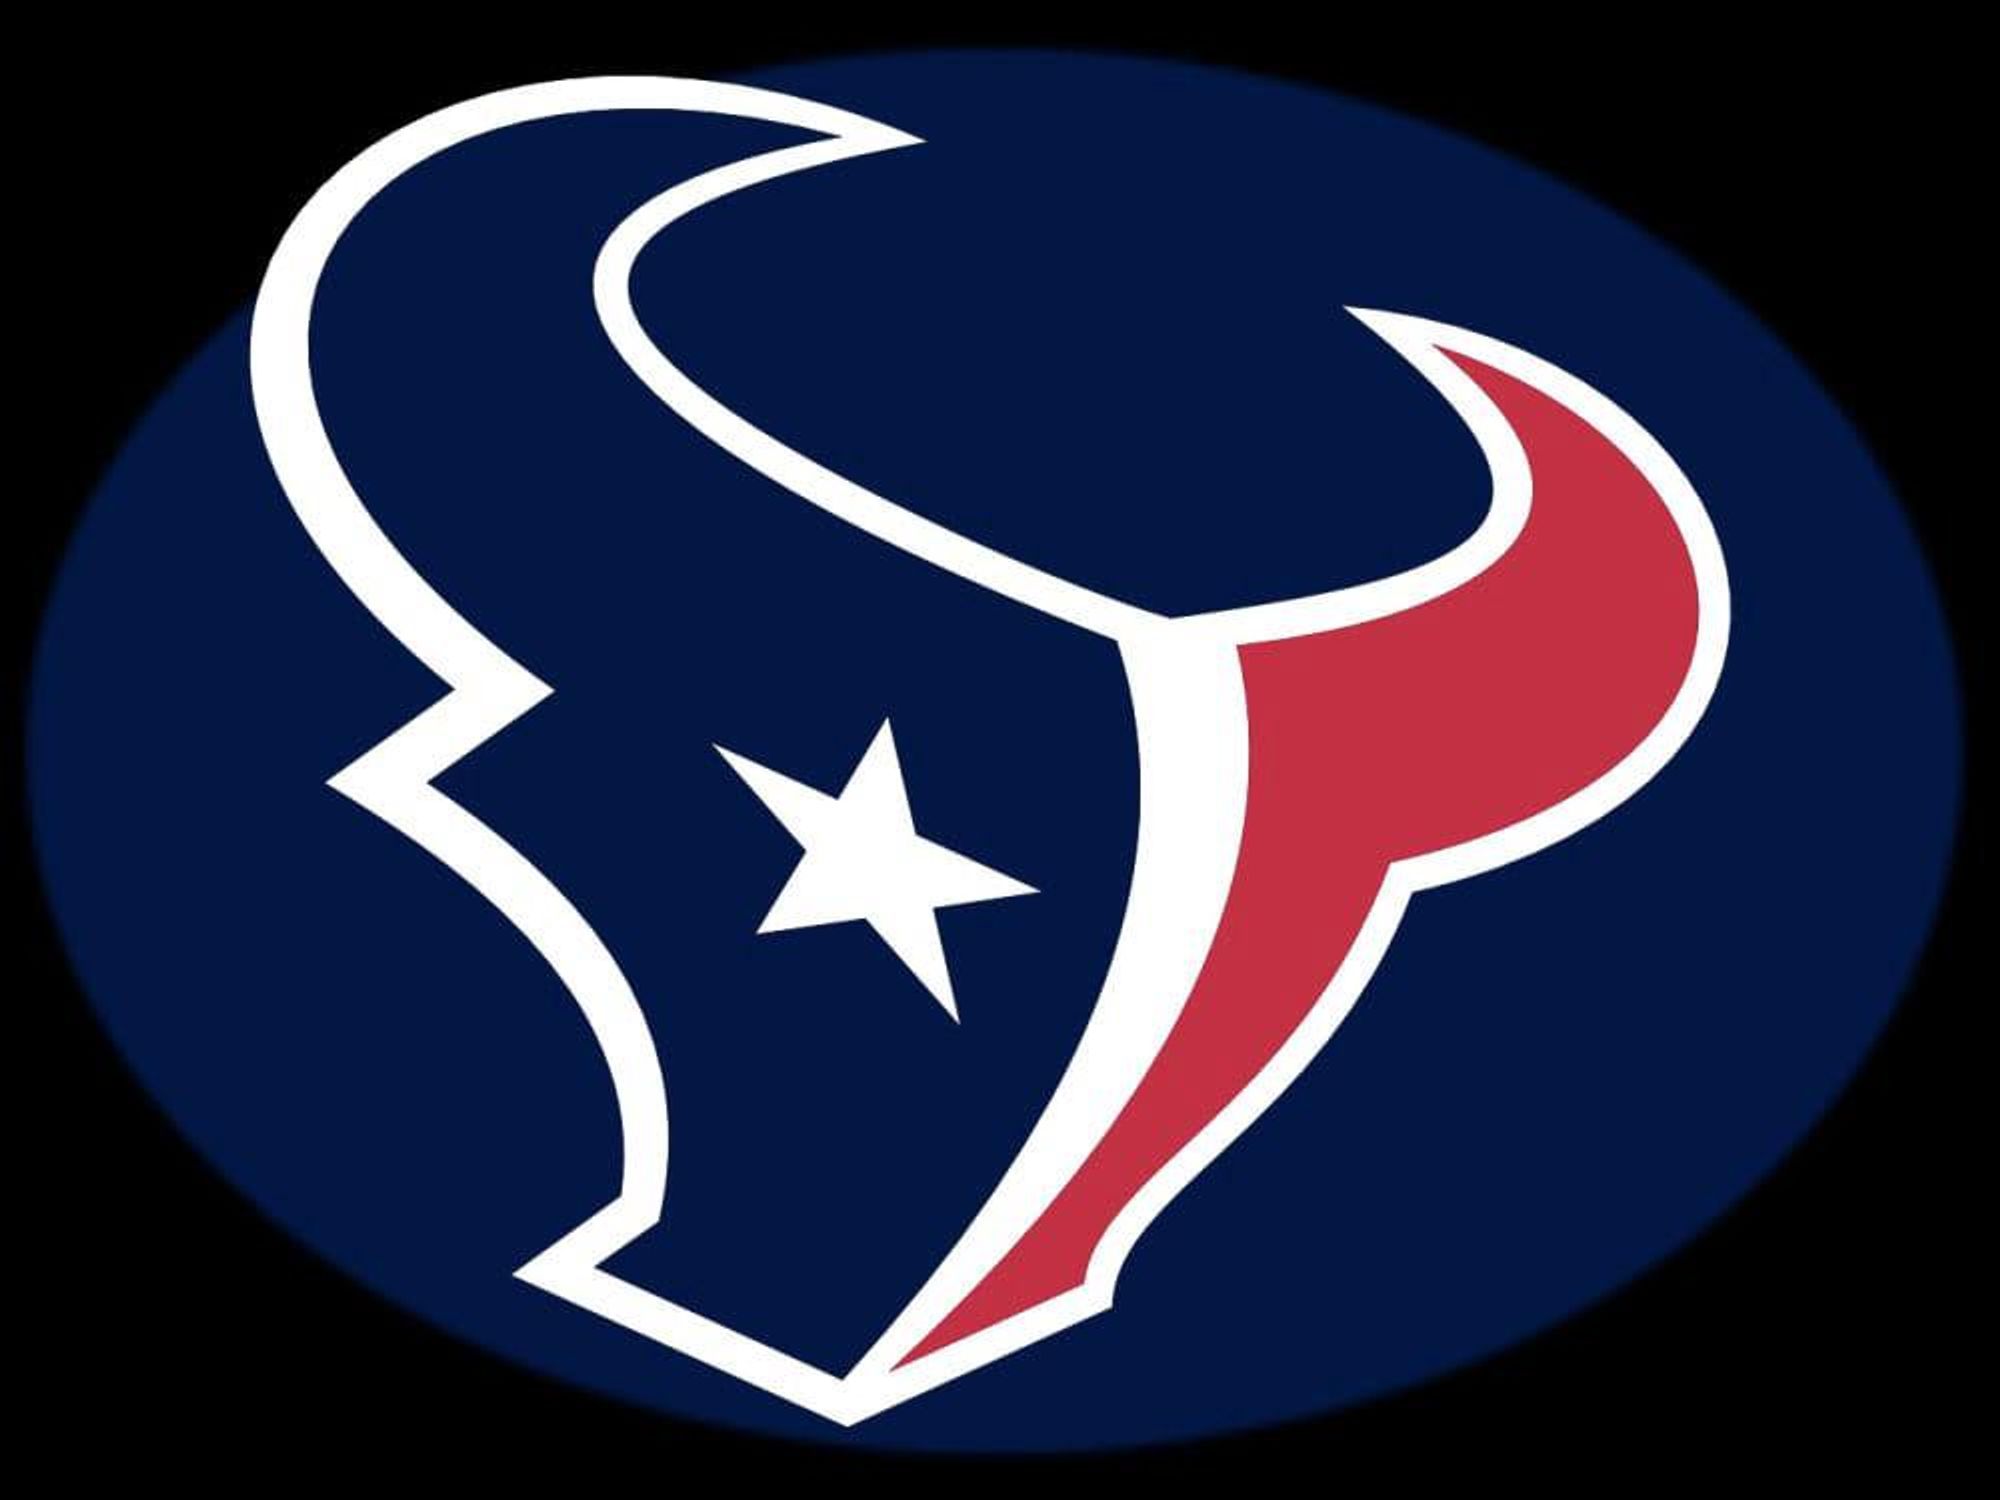 News_Clifford_2019 Predictions_Houston Texans_logo_color